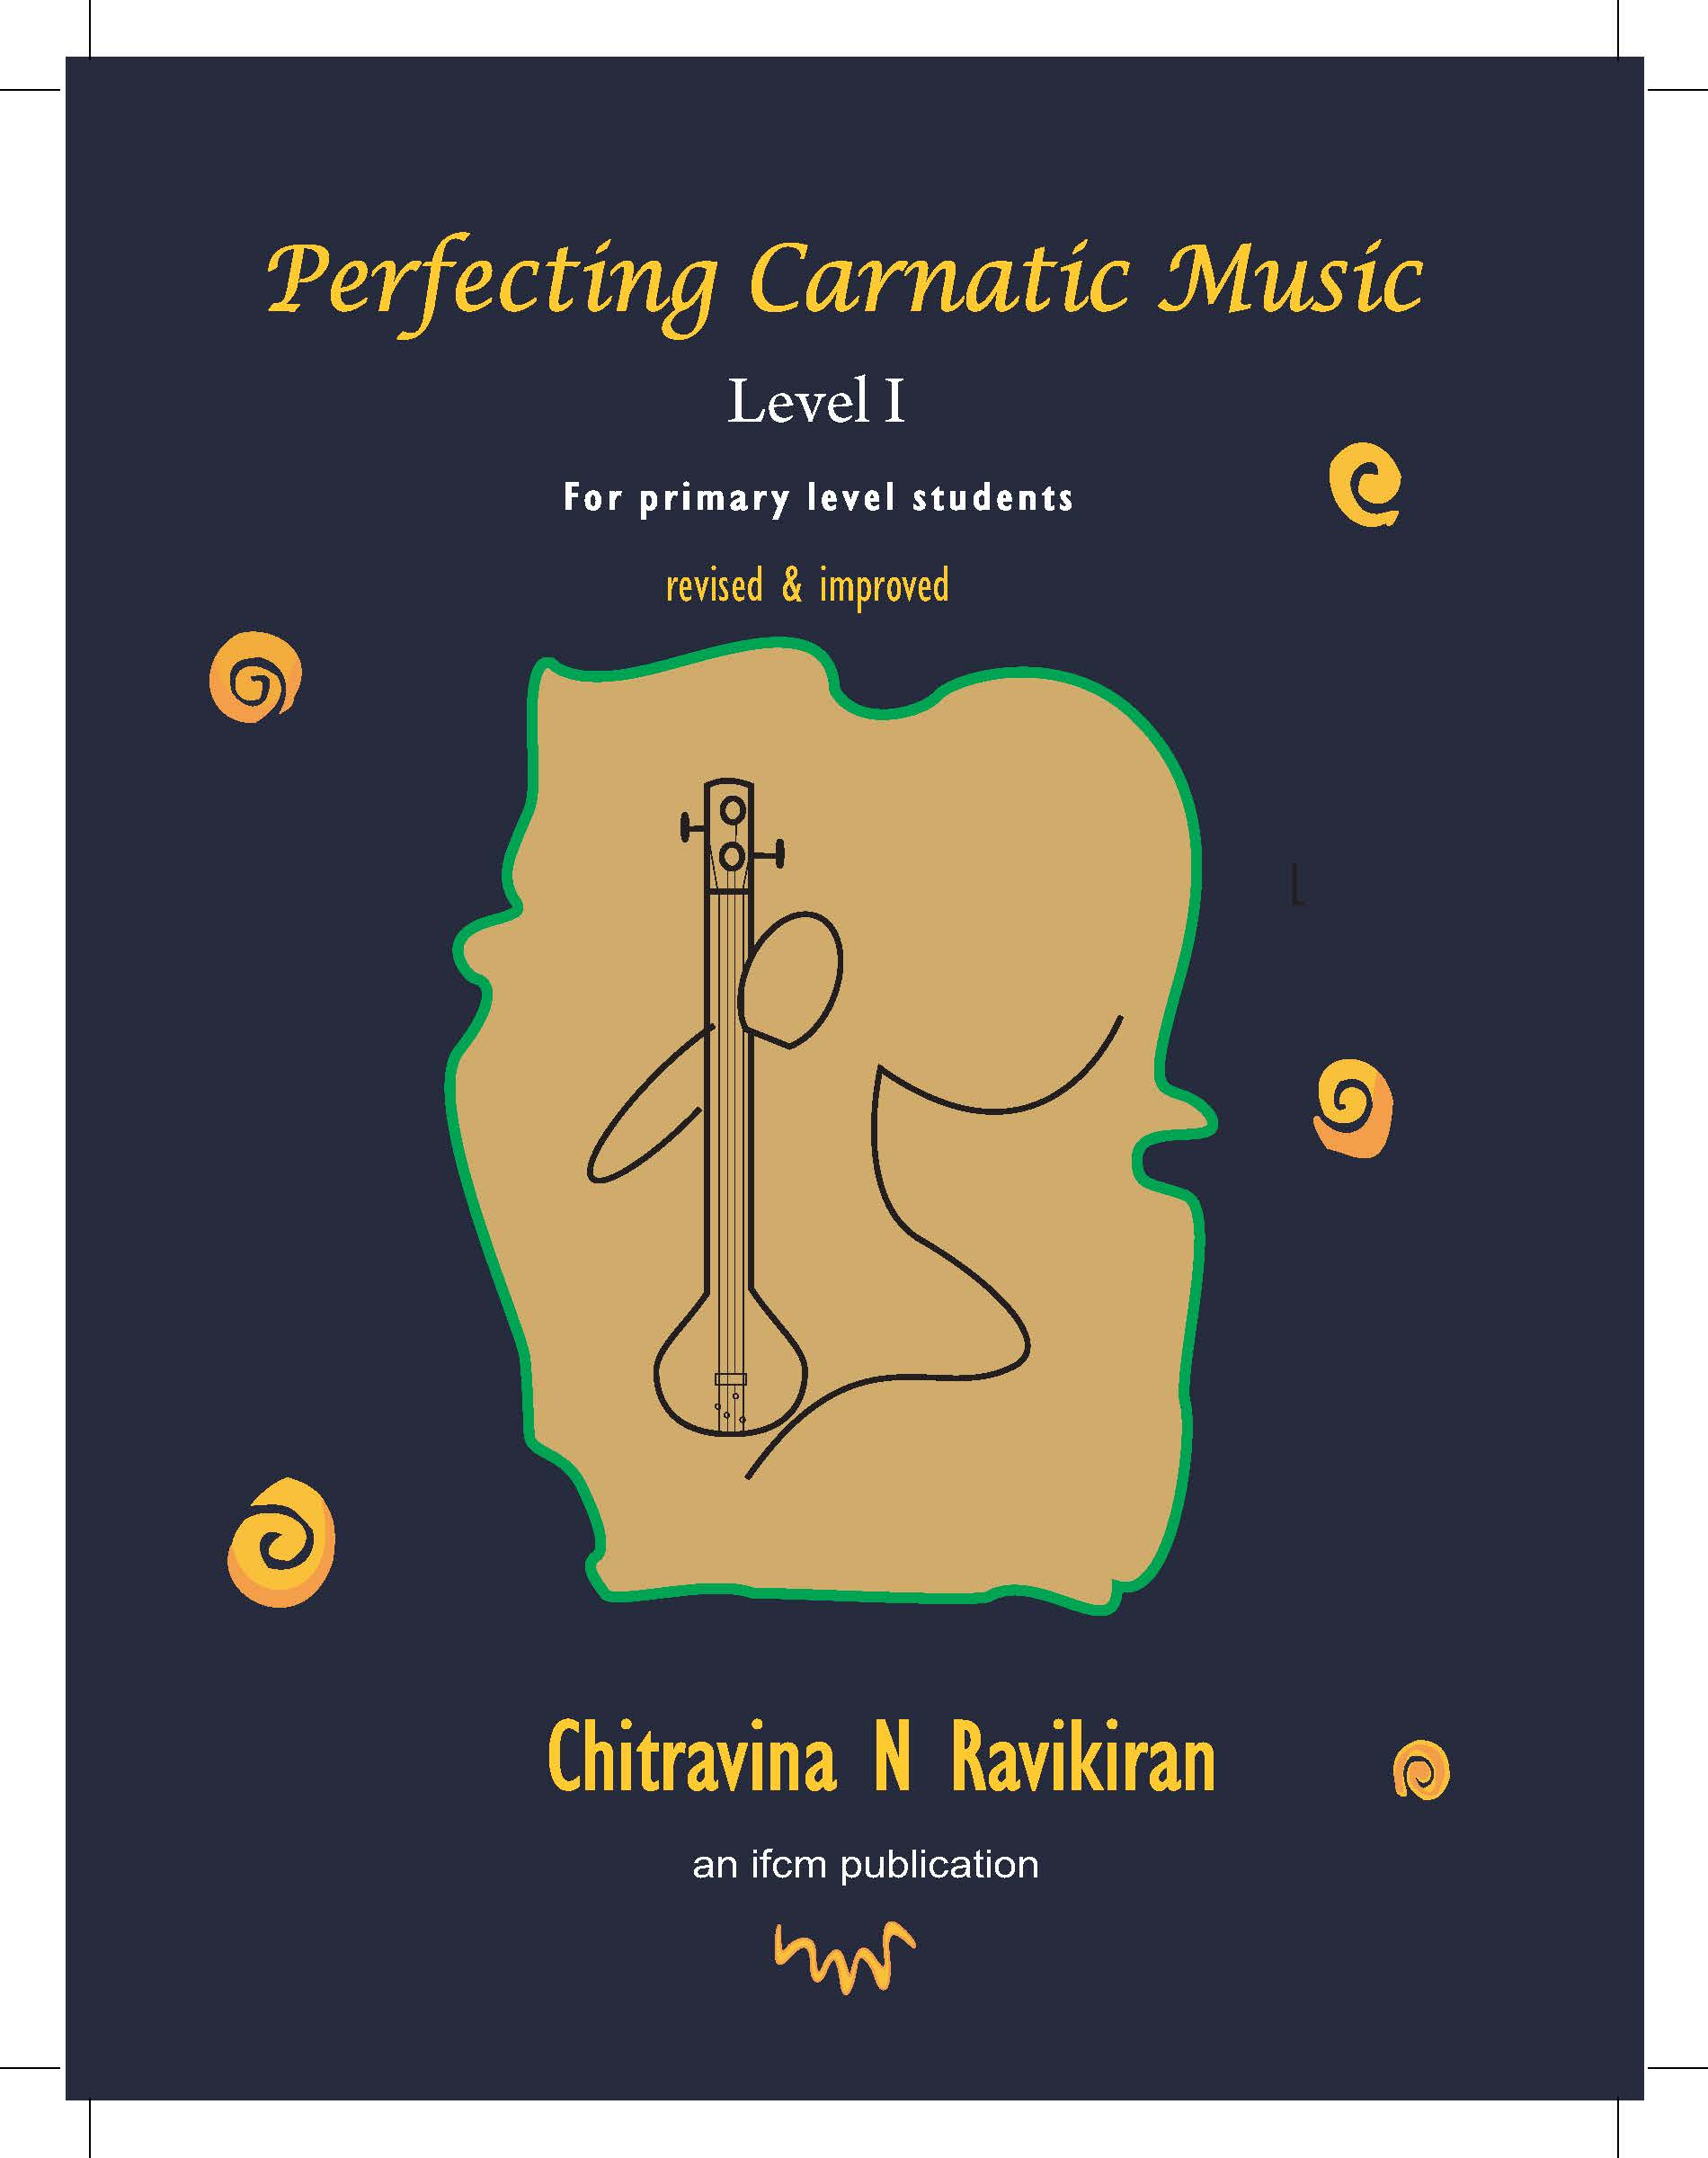 carnatic music lessons geetham